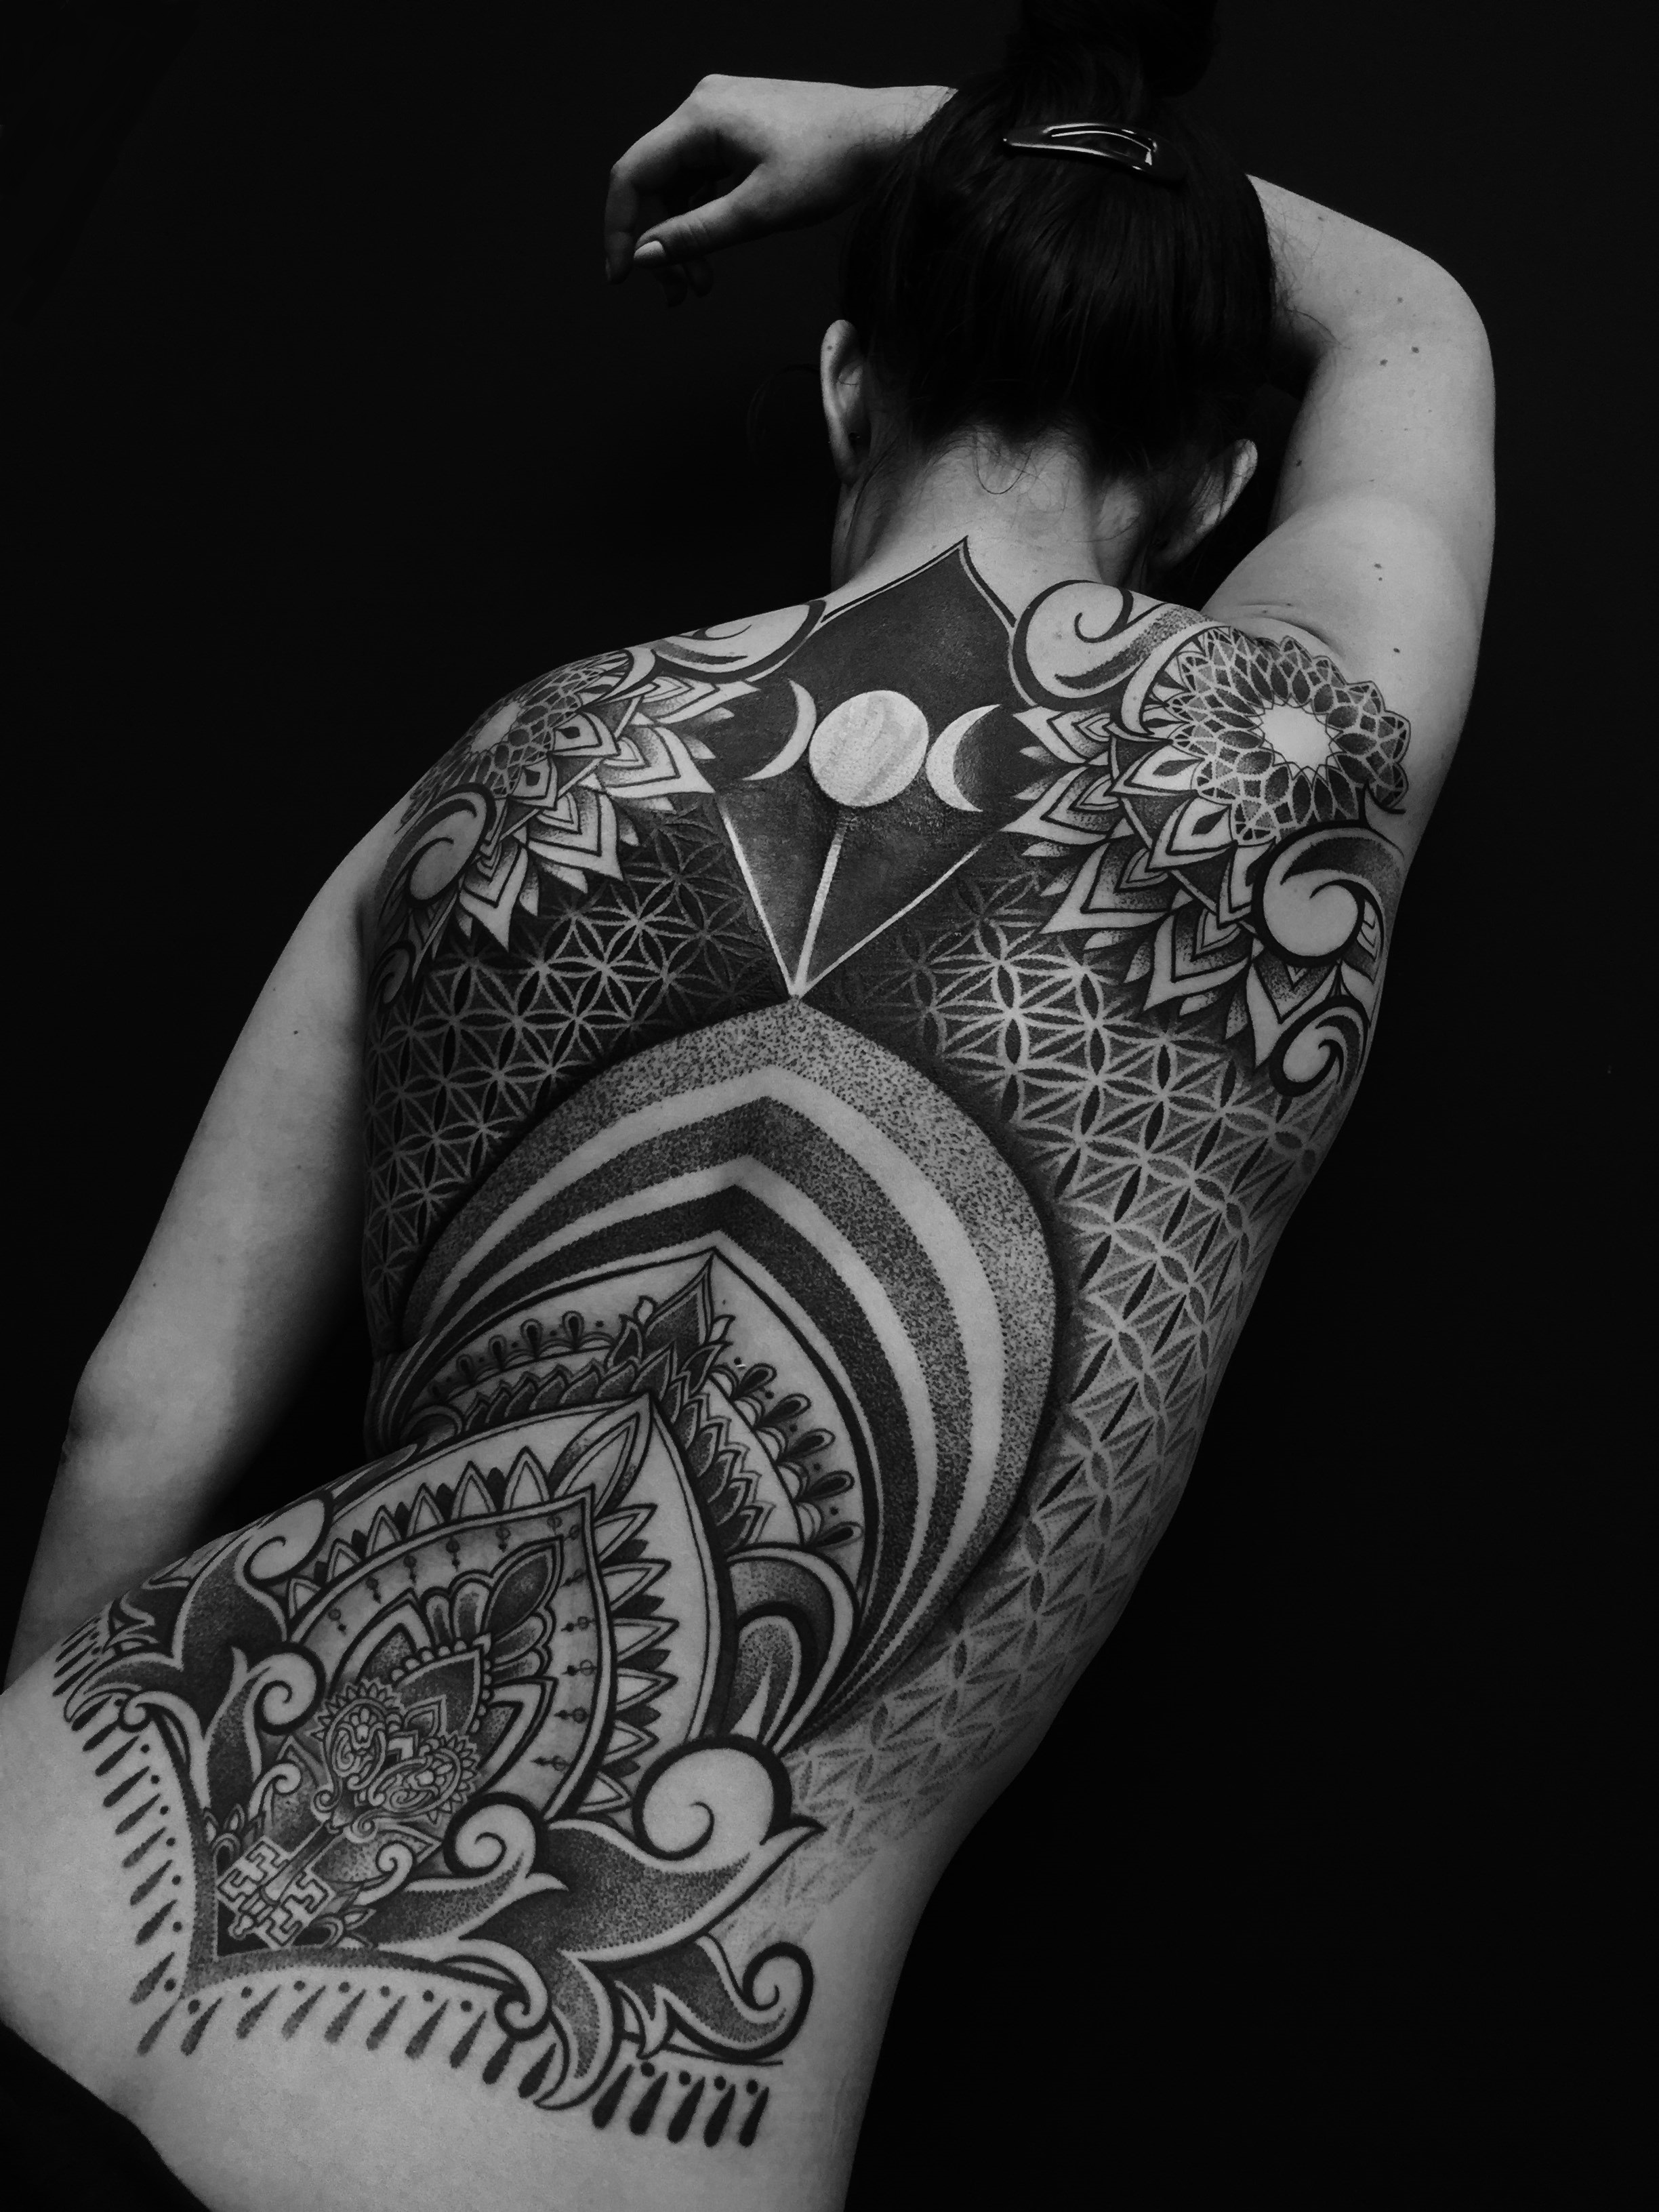 Los Santos Tattoo [Jose Marranca] • Tattoo Artist • Tattoodo